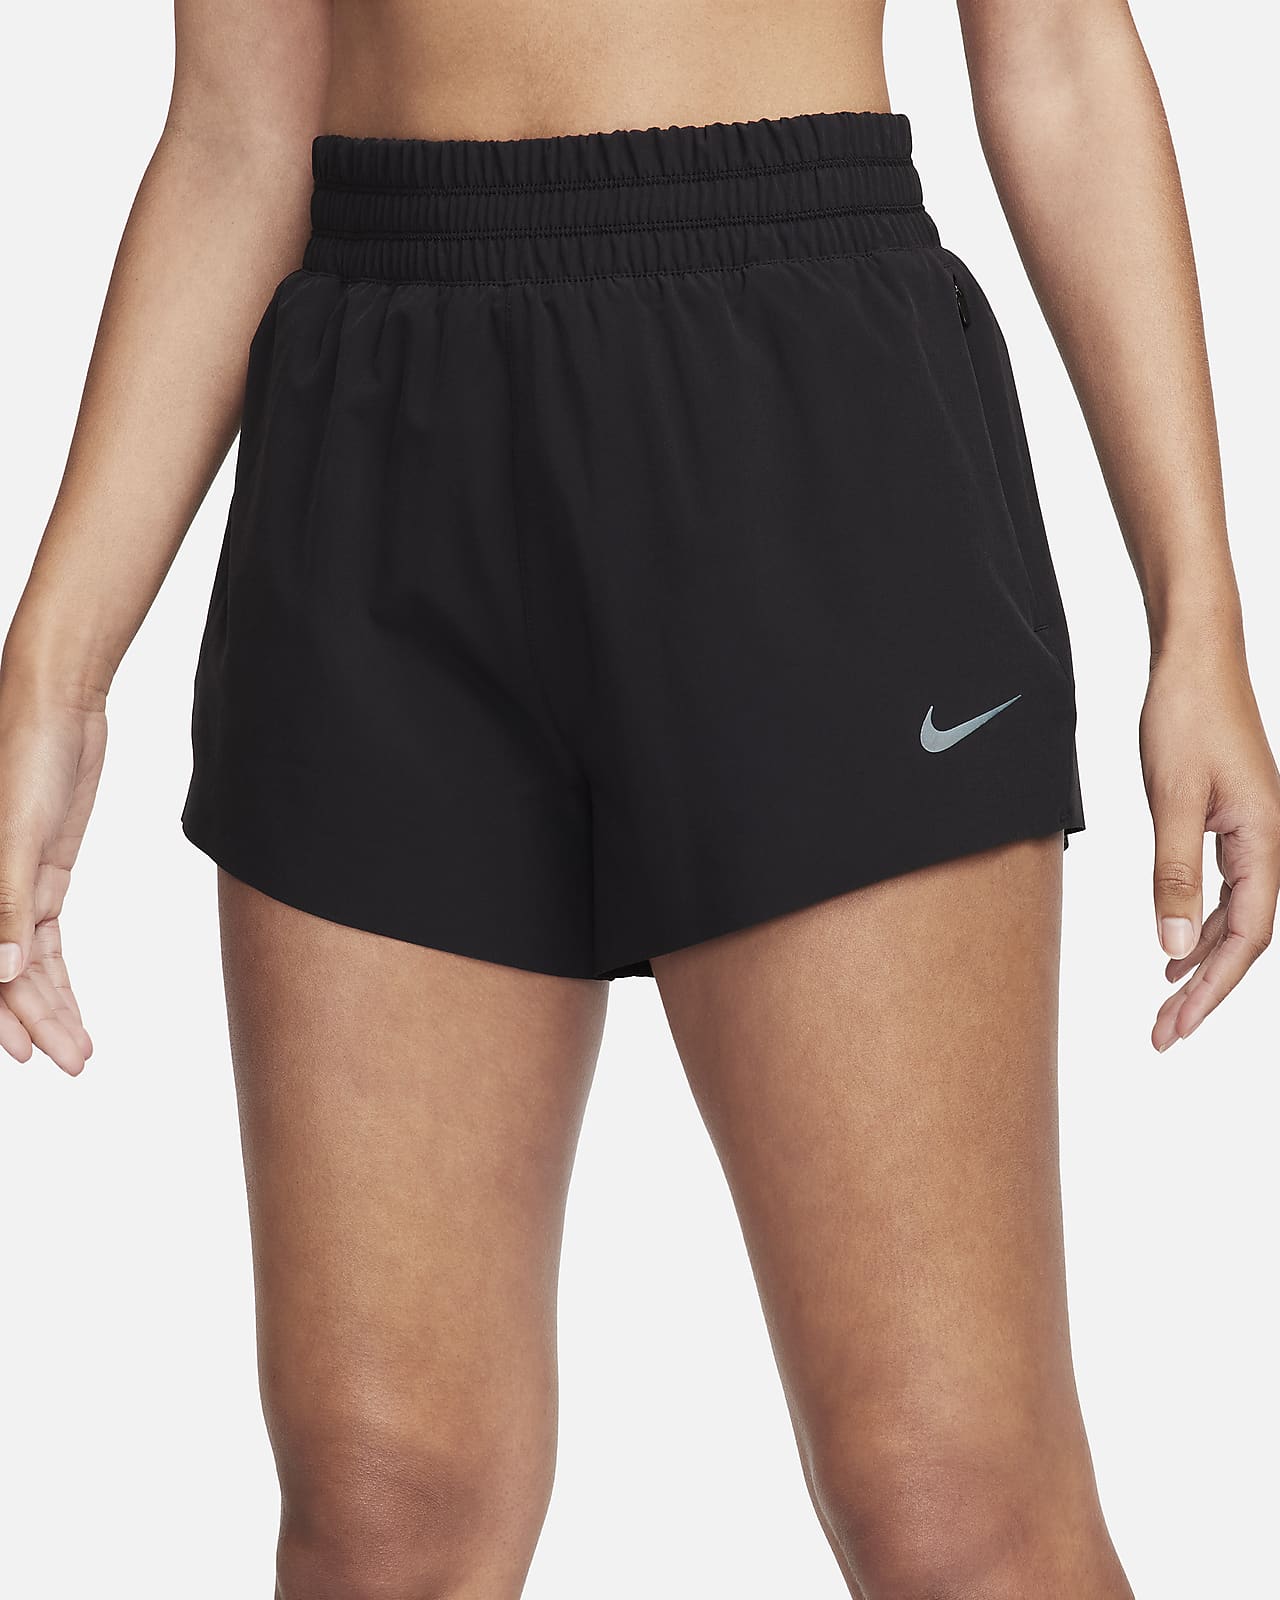 Nike Running Shorts, Mens & Womens